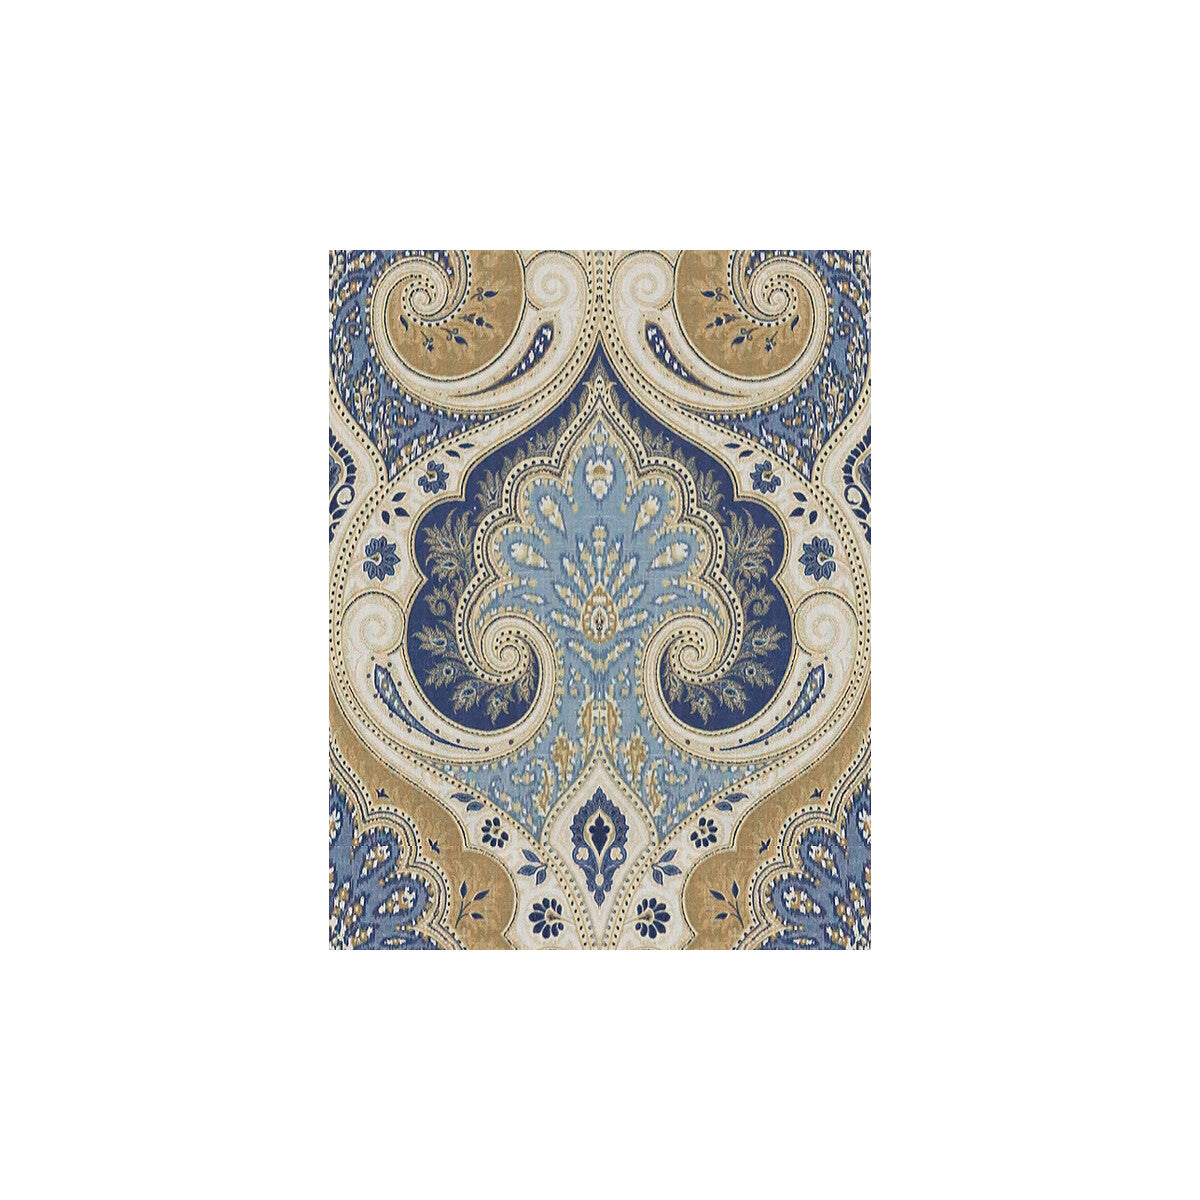 Latika fabric in delta color - pattern LATIKA.516.0 - by Kravet Design in the The Echo Design collection